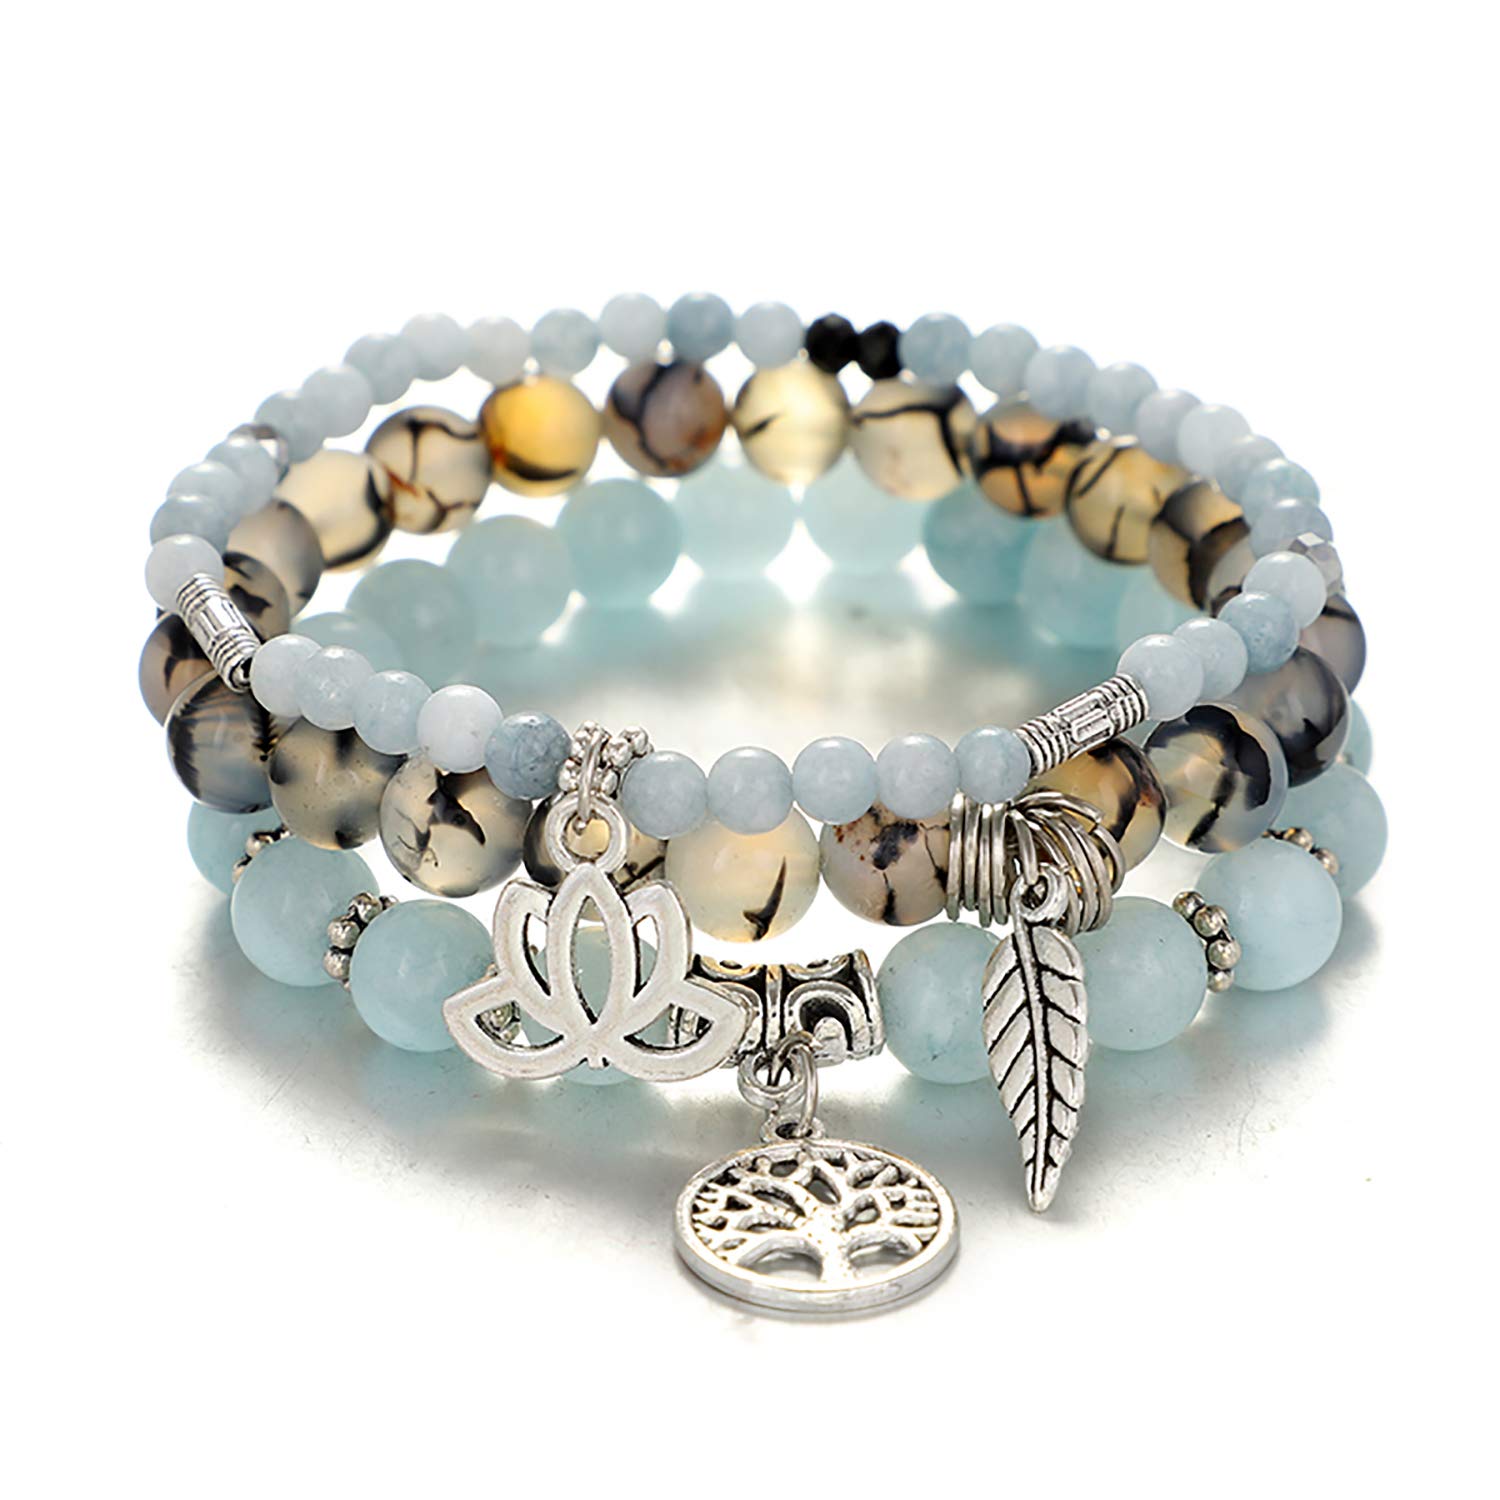 UEUC Tree of Life Yoga Healing Stone Bracelets,Multilayer Lotus Chakra Stone Reiki Bracelet Sets,Anxiety Crystal Natural Stone,for Women Stress Relief